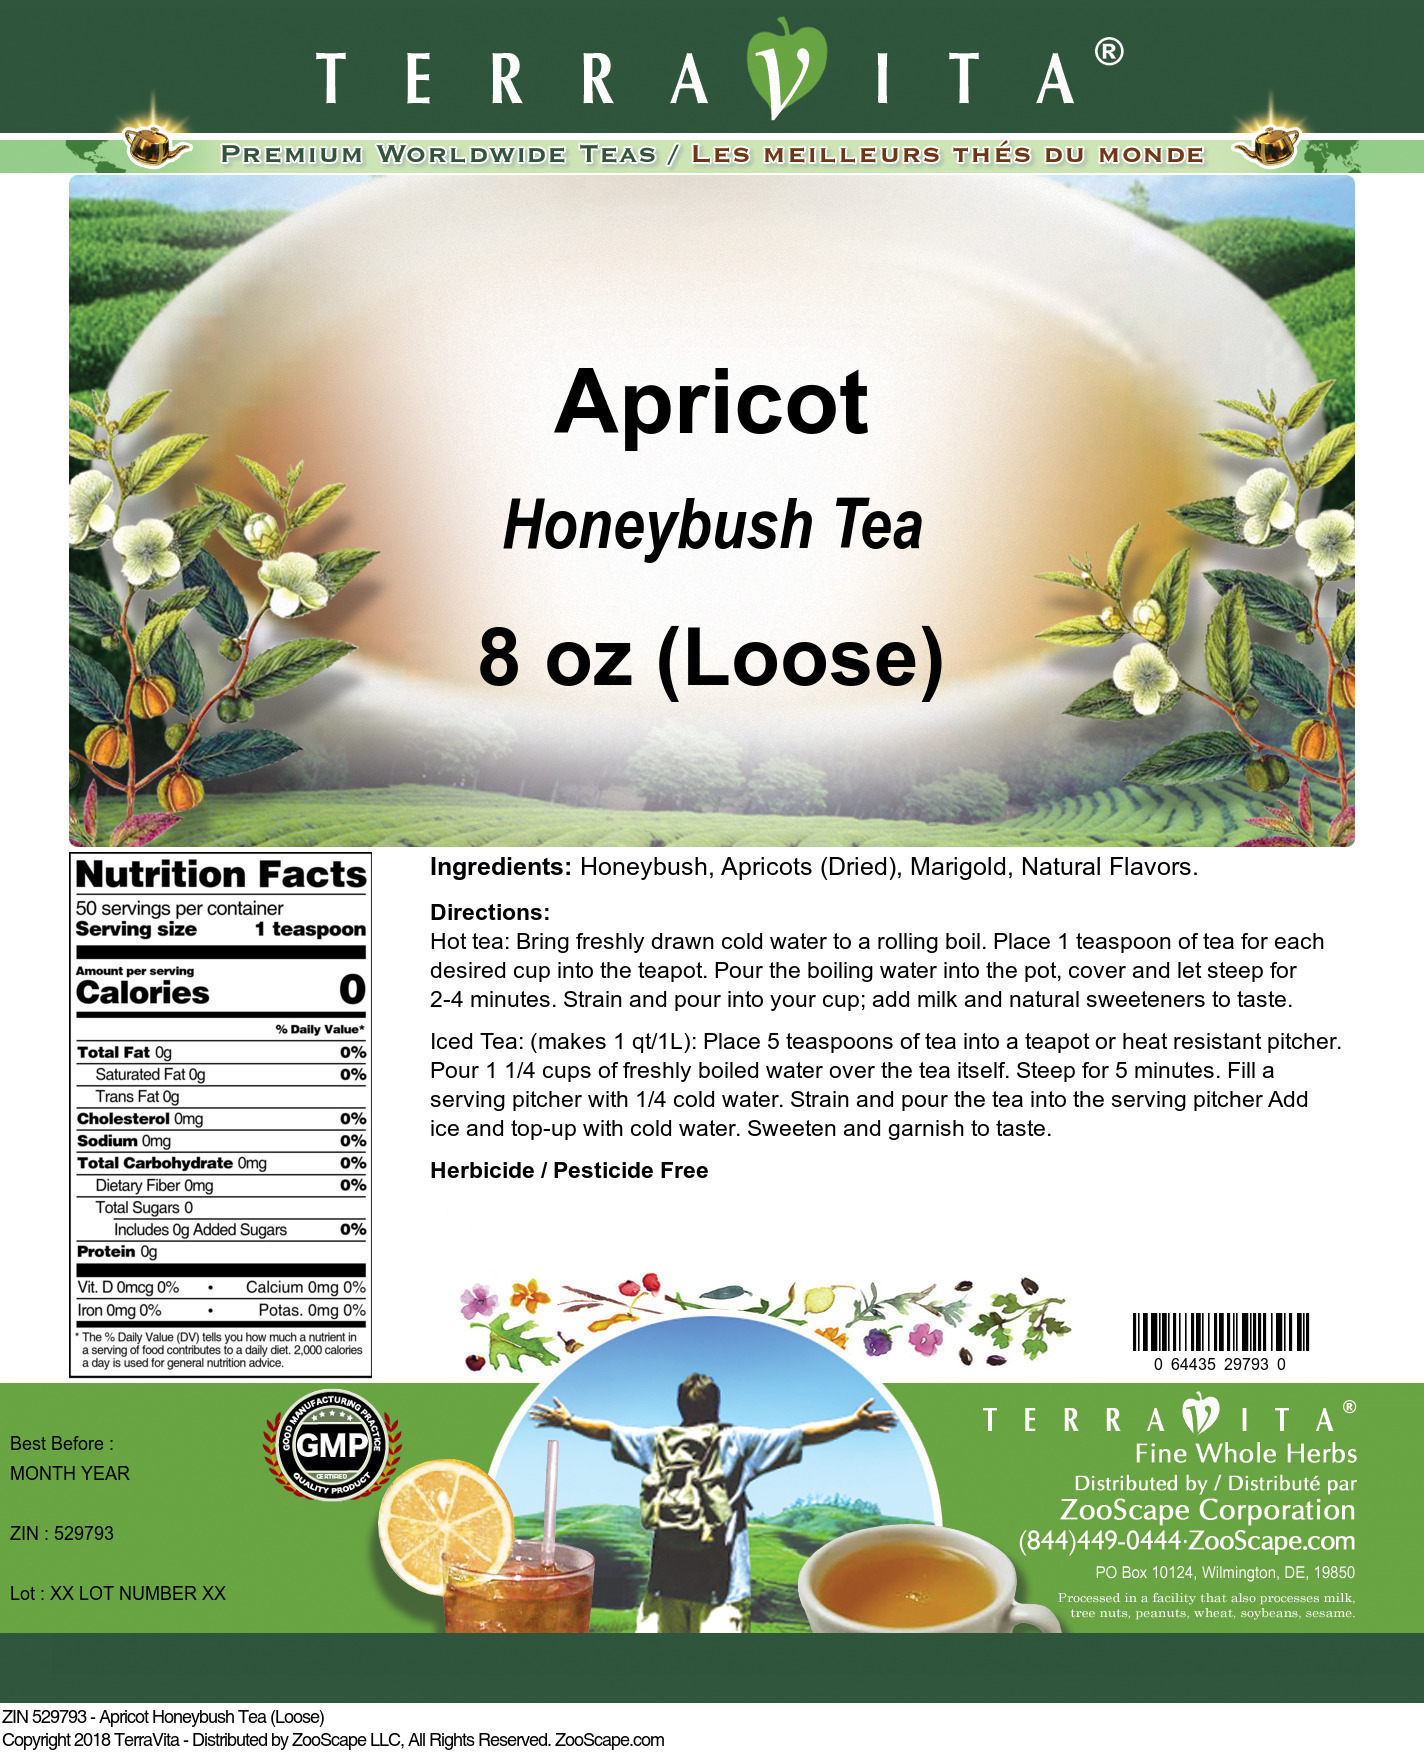 Apricot Honeybush Tea (Loose) - Label